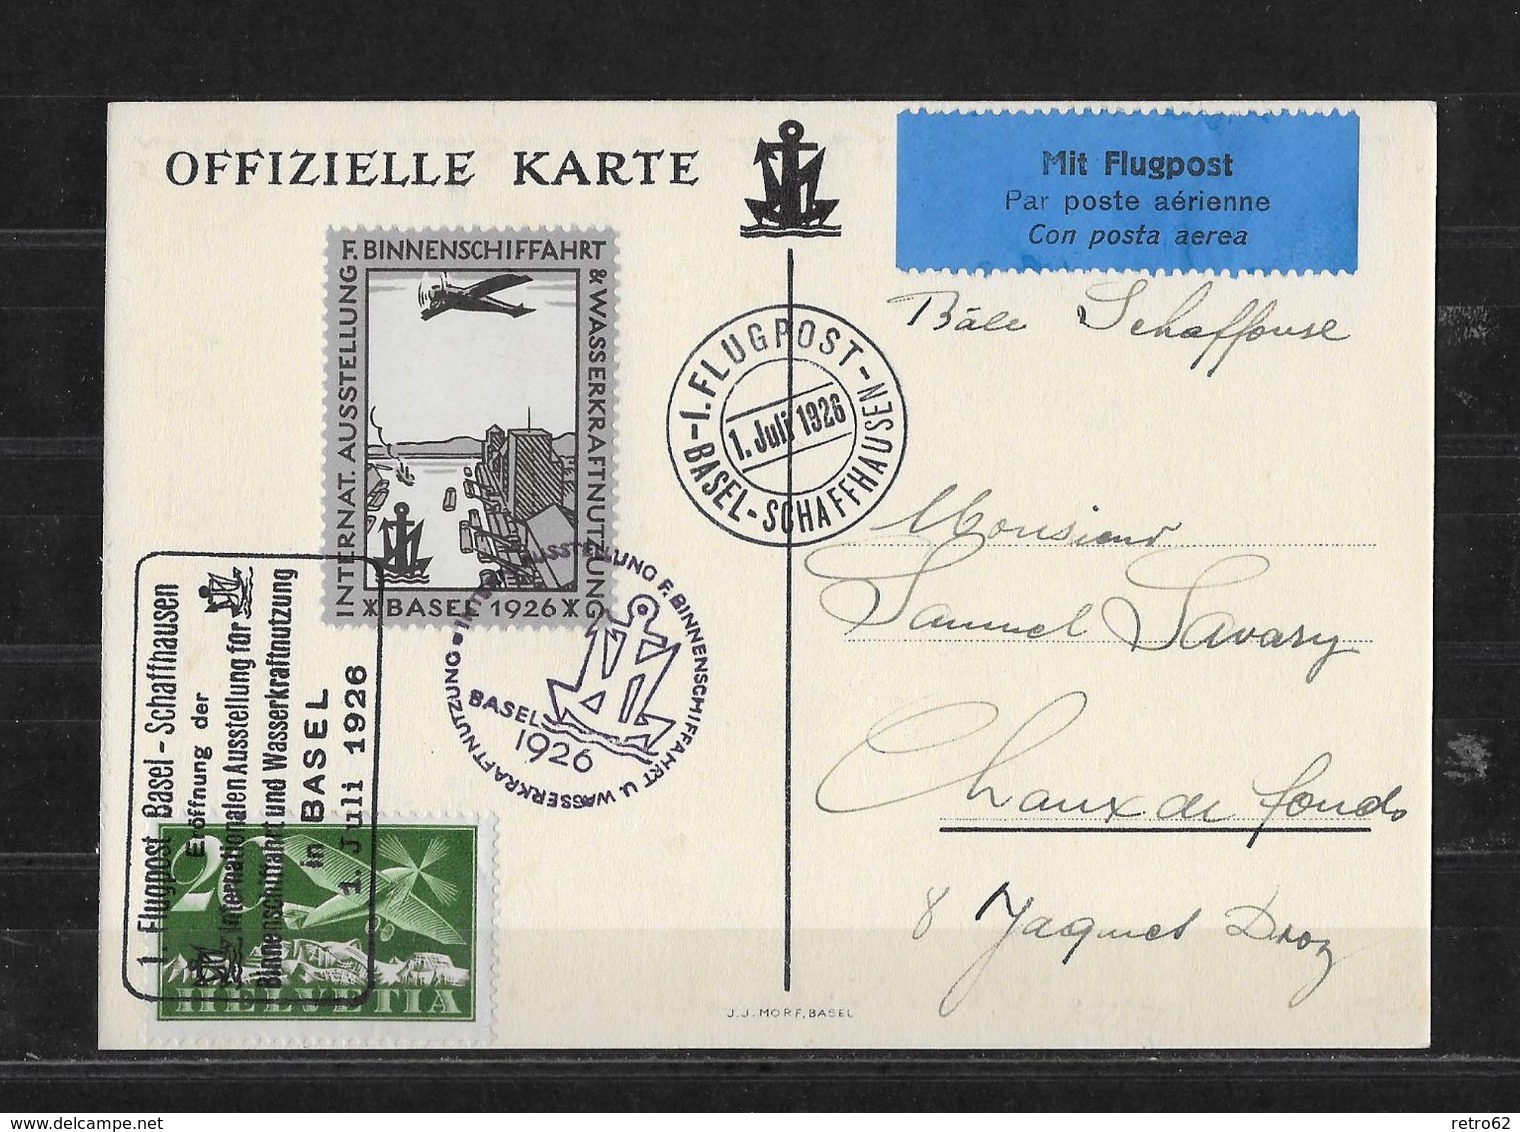 FLUGPOST → 1926 Off. Karte Int. Ausstellung In Basel, Flugpost Basel-Schaffhausen Mit Vignette - First Flight Covers